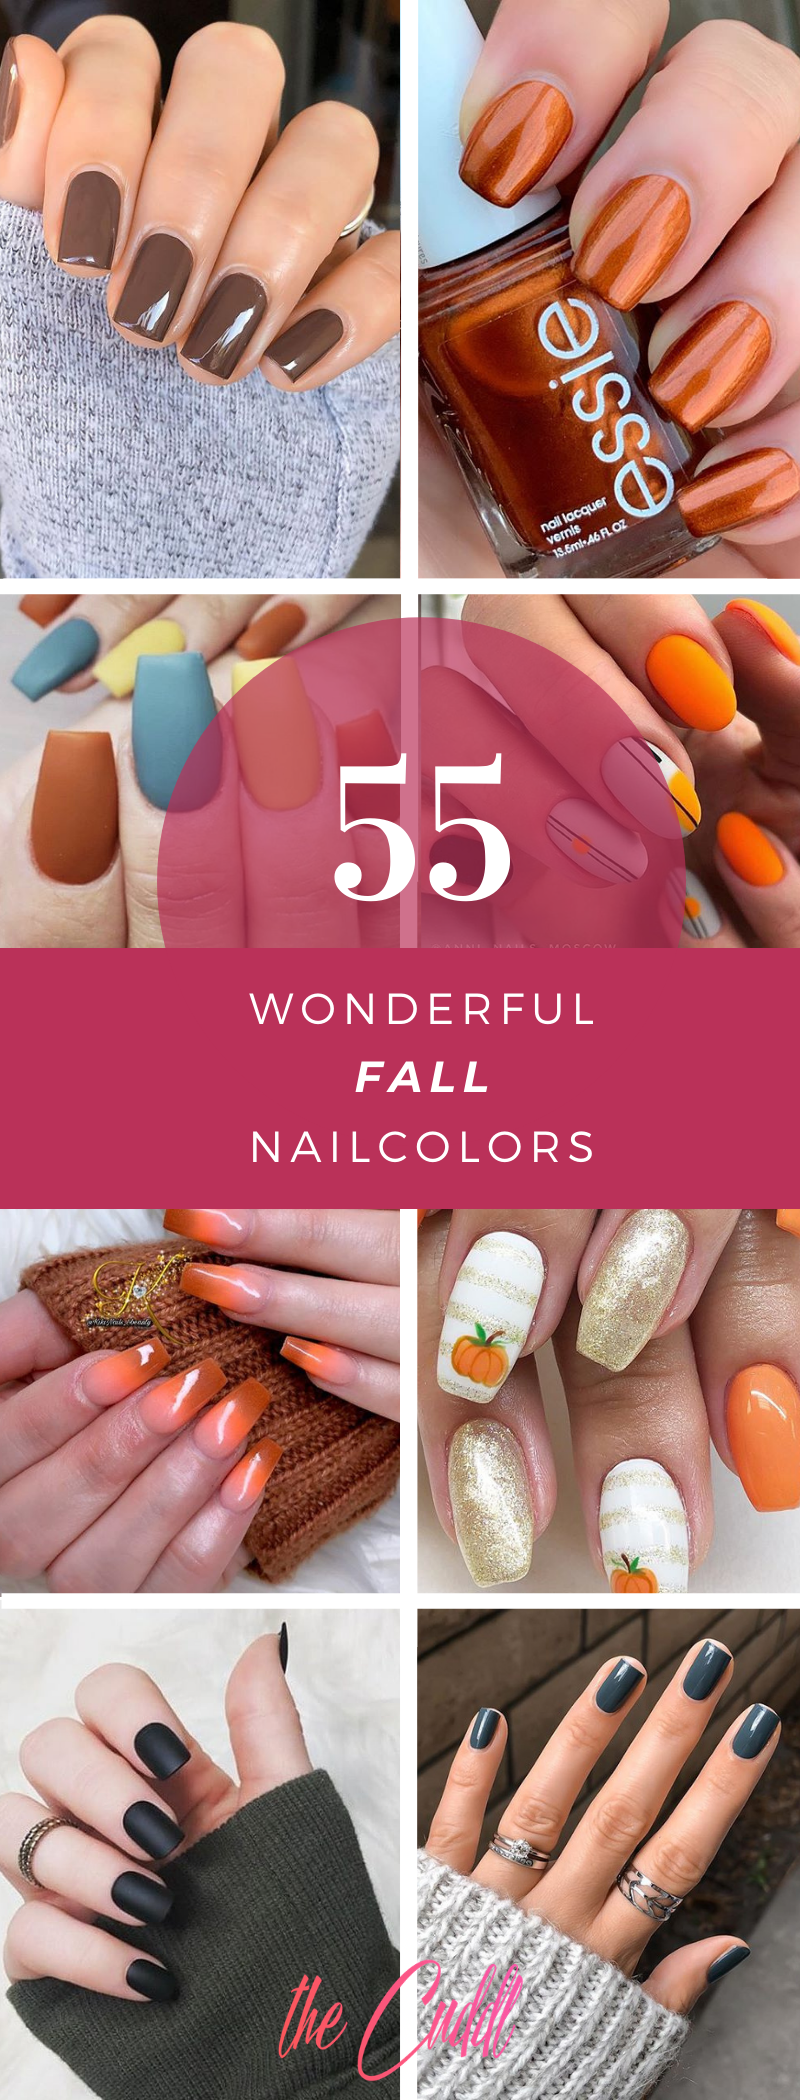 Top 50 Most Popular Fall Nail Designs